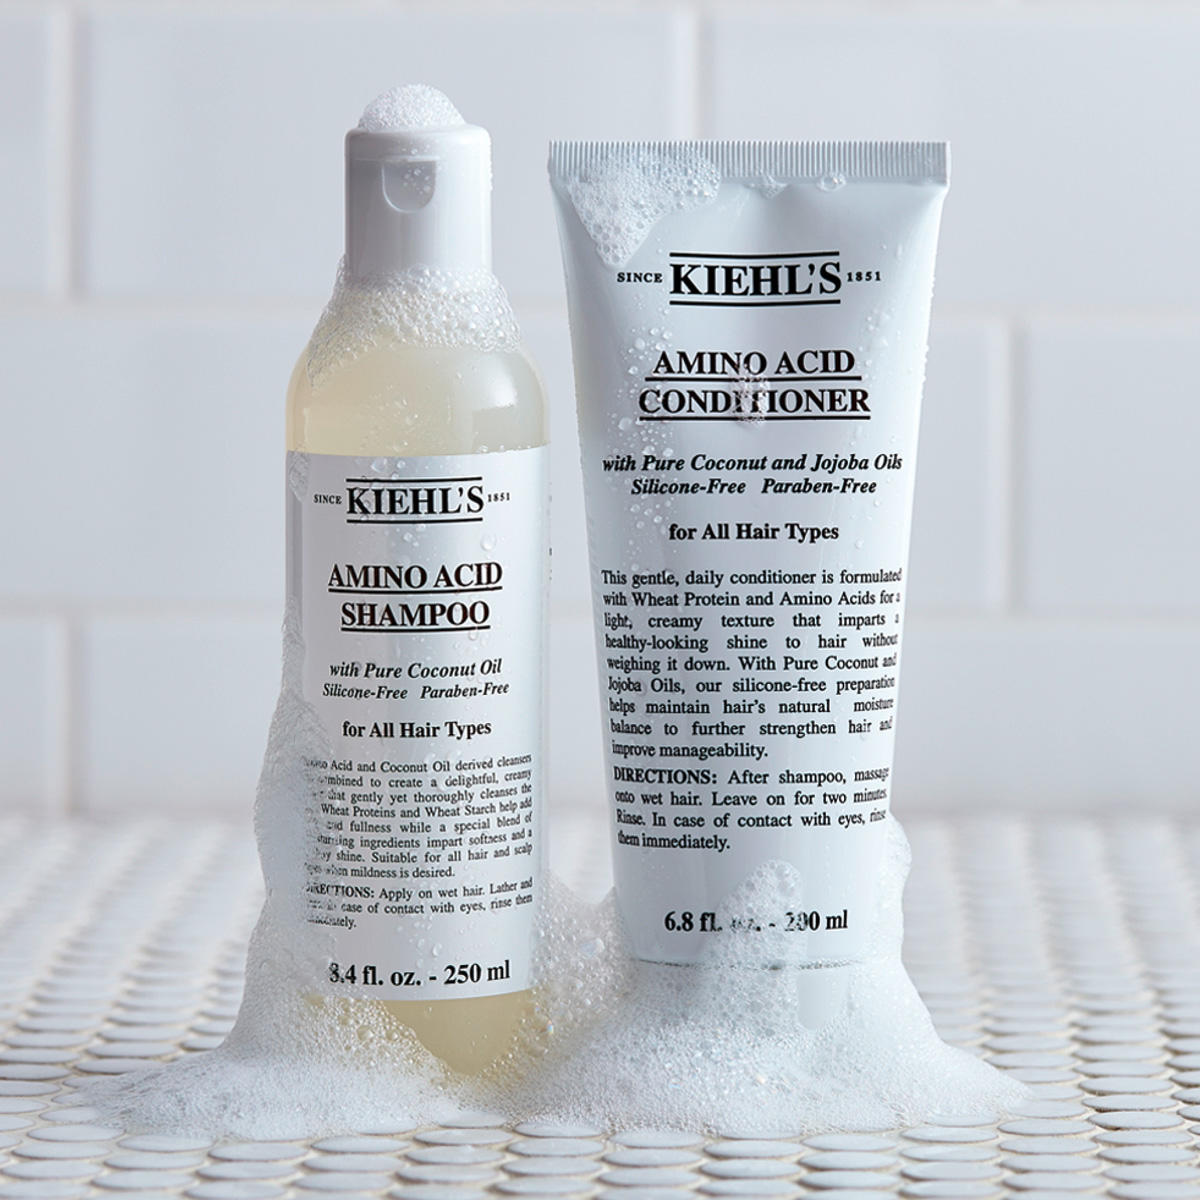 Kiehl's Amino Acid Shampoo 250 ml - 6